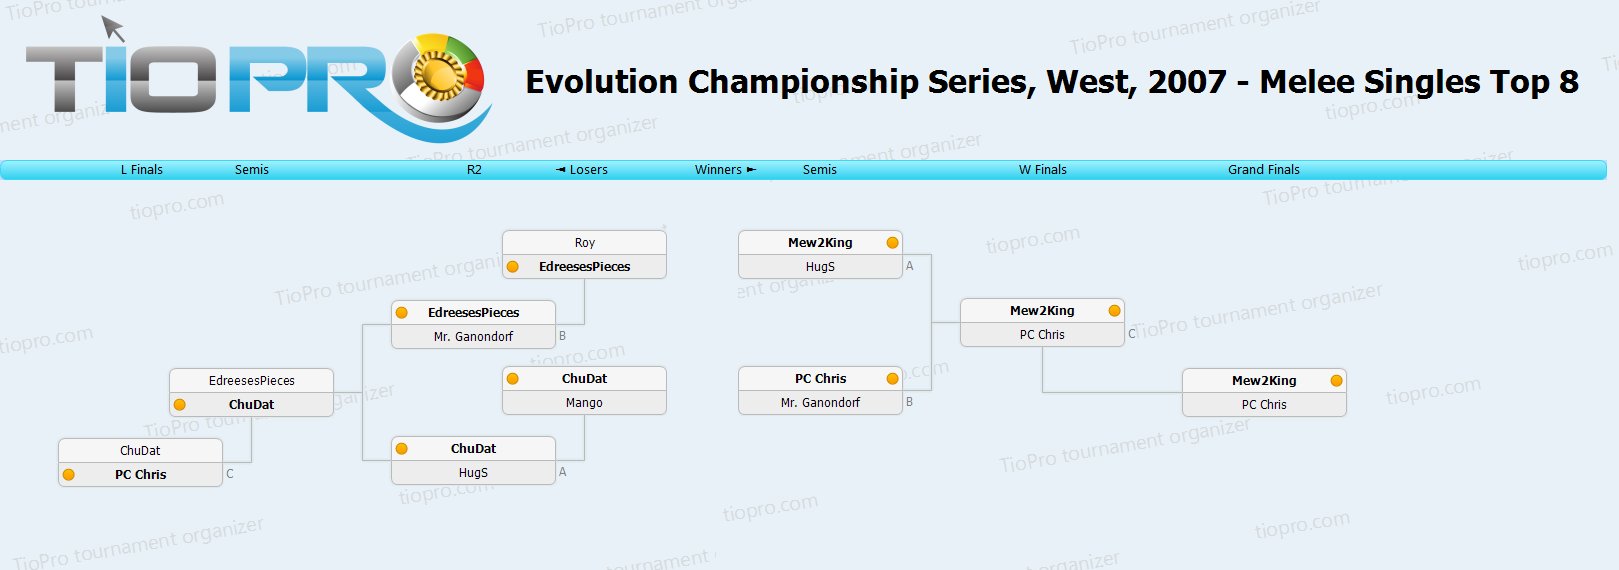 Evolution Championship Series, West, 2007: Melee Singles Top 8